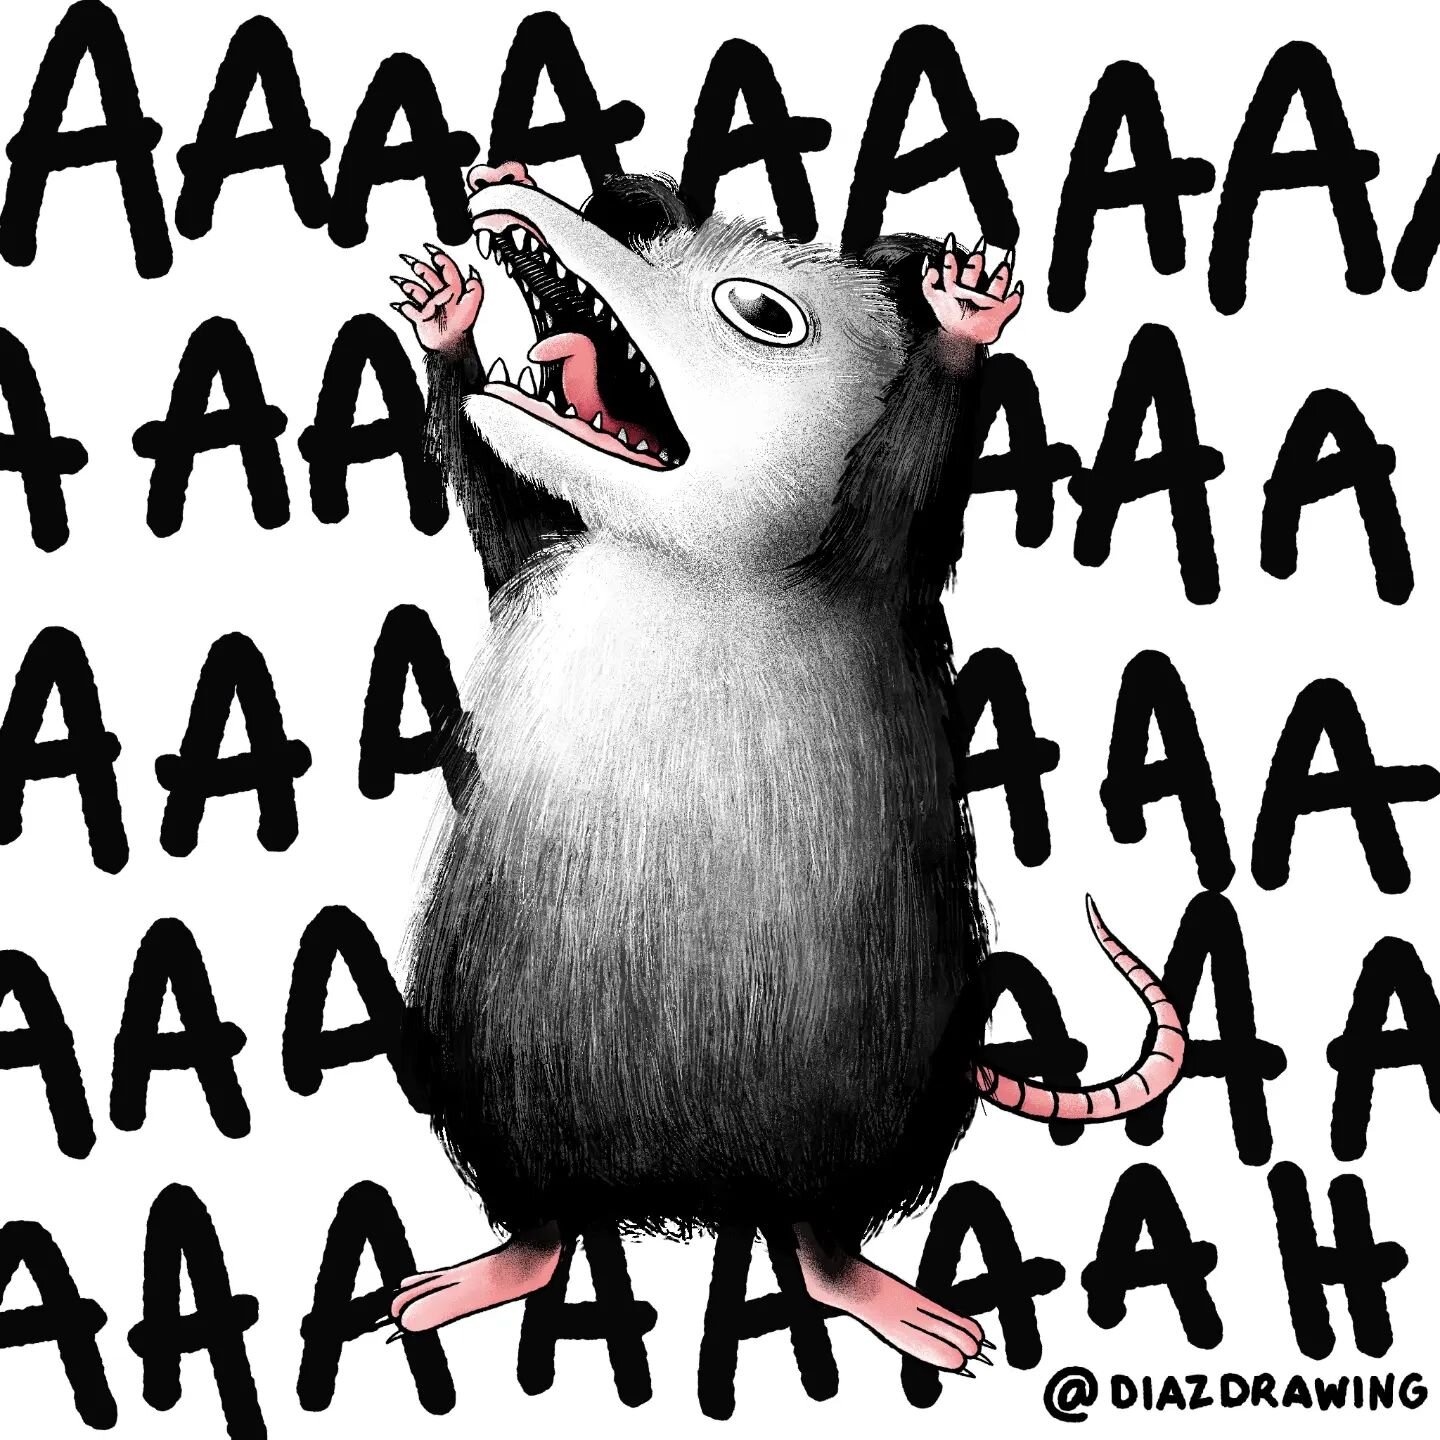 When my therapist asks how I'm feeling today
.
.
.
.
#possum #possummemes #scream #mentalhealth #drawing #procreate #artistsoninstagram #animals #digitalart